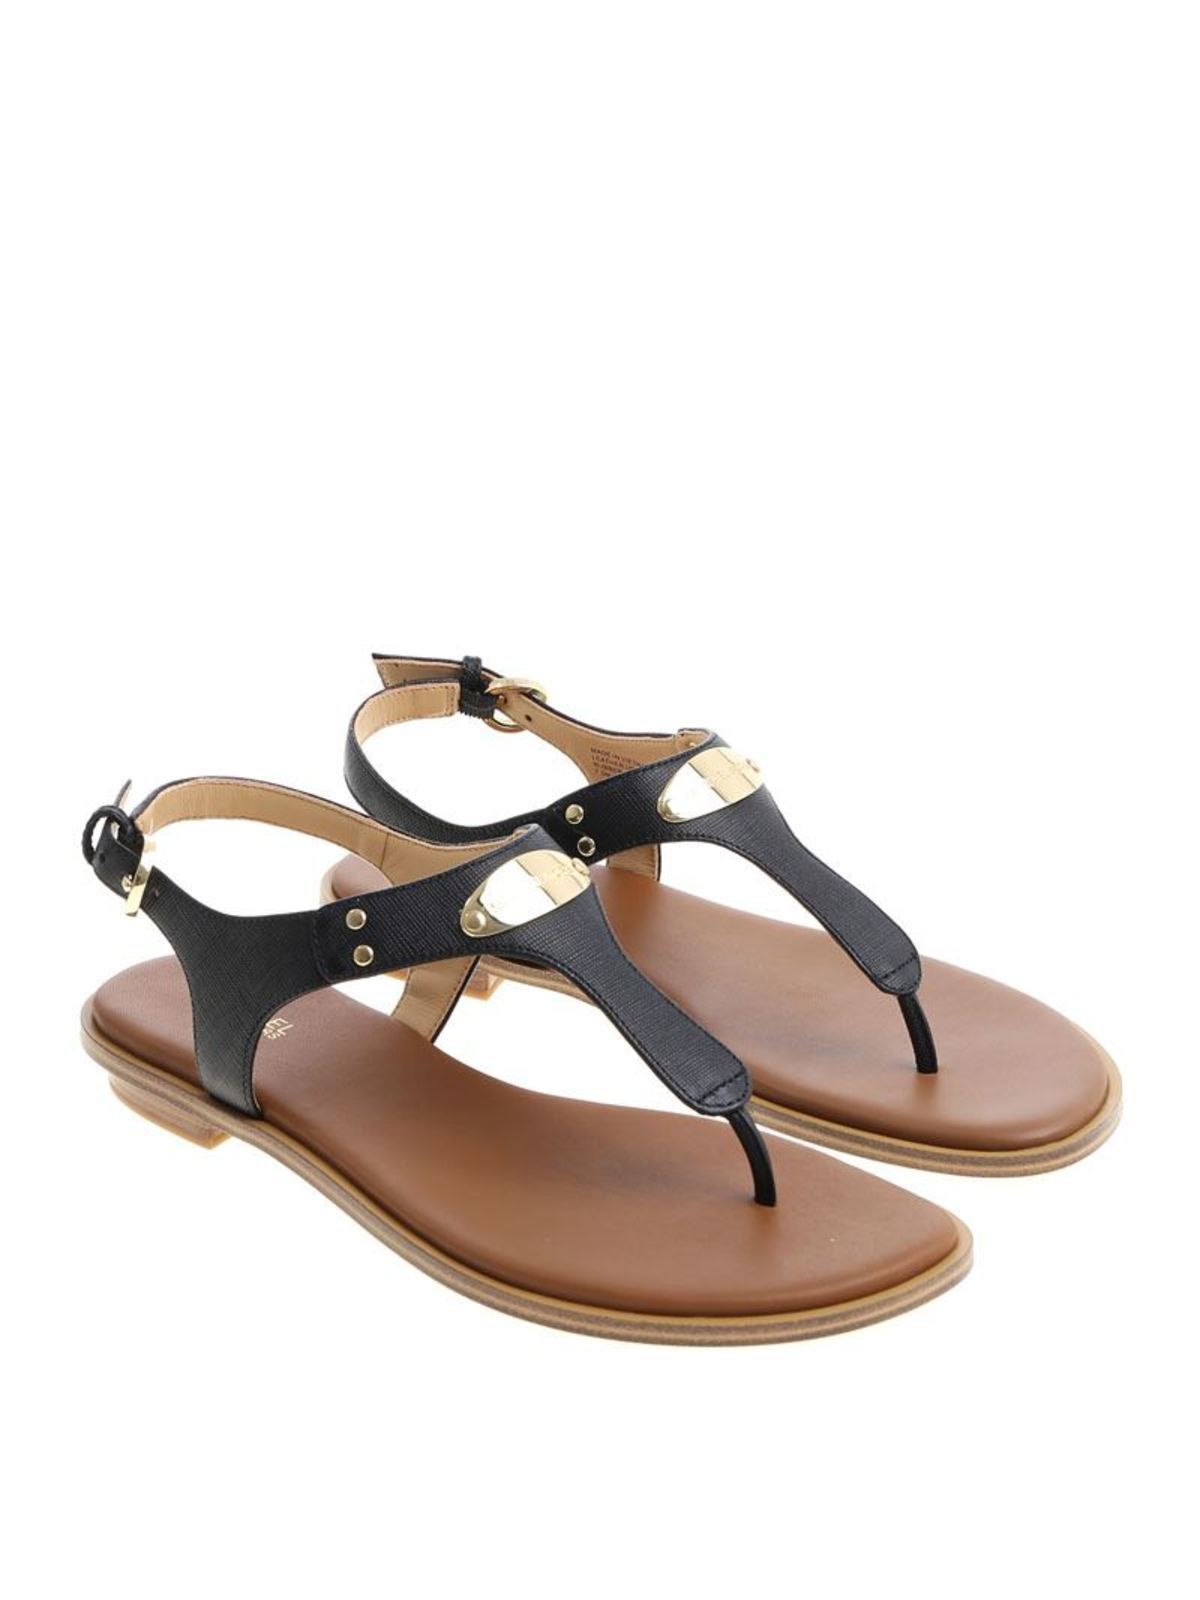 Sandals Michael Kors - MK Plate Thong sandals in black - 40U2MKFA2LBLACK